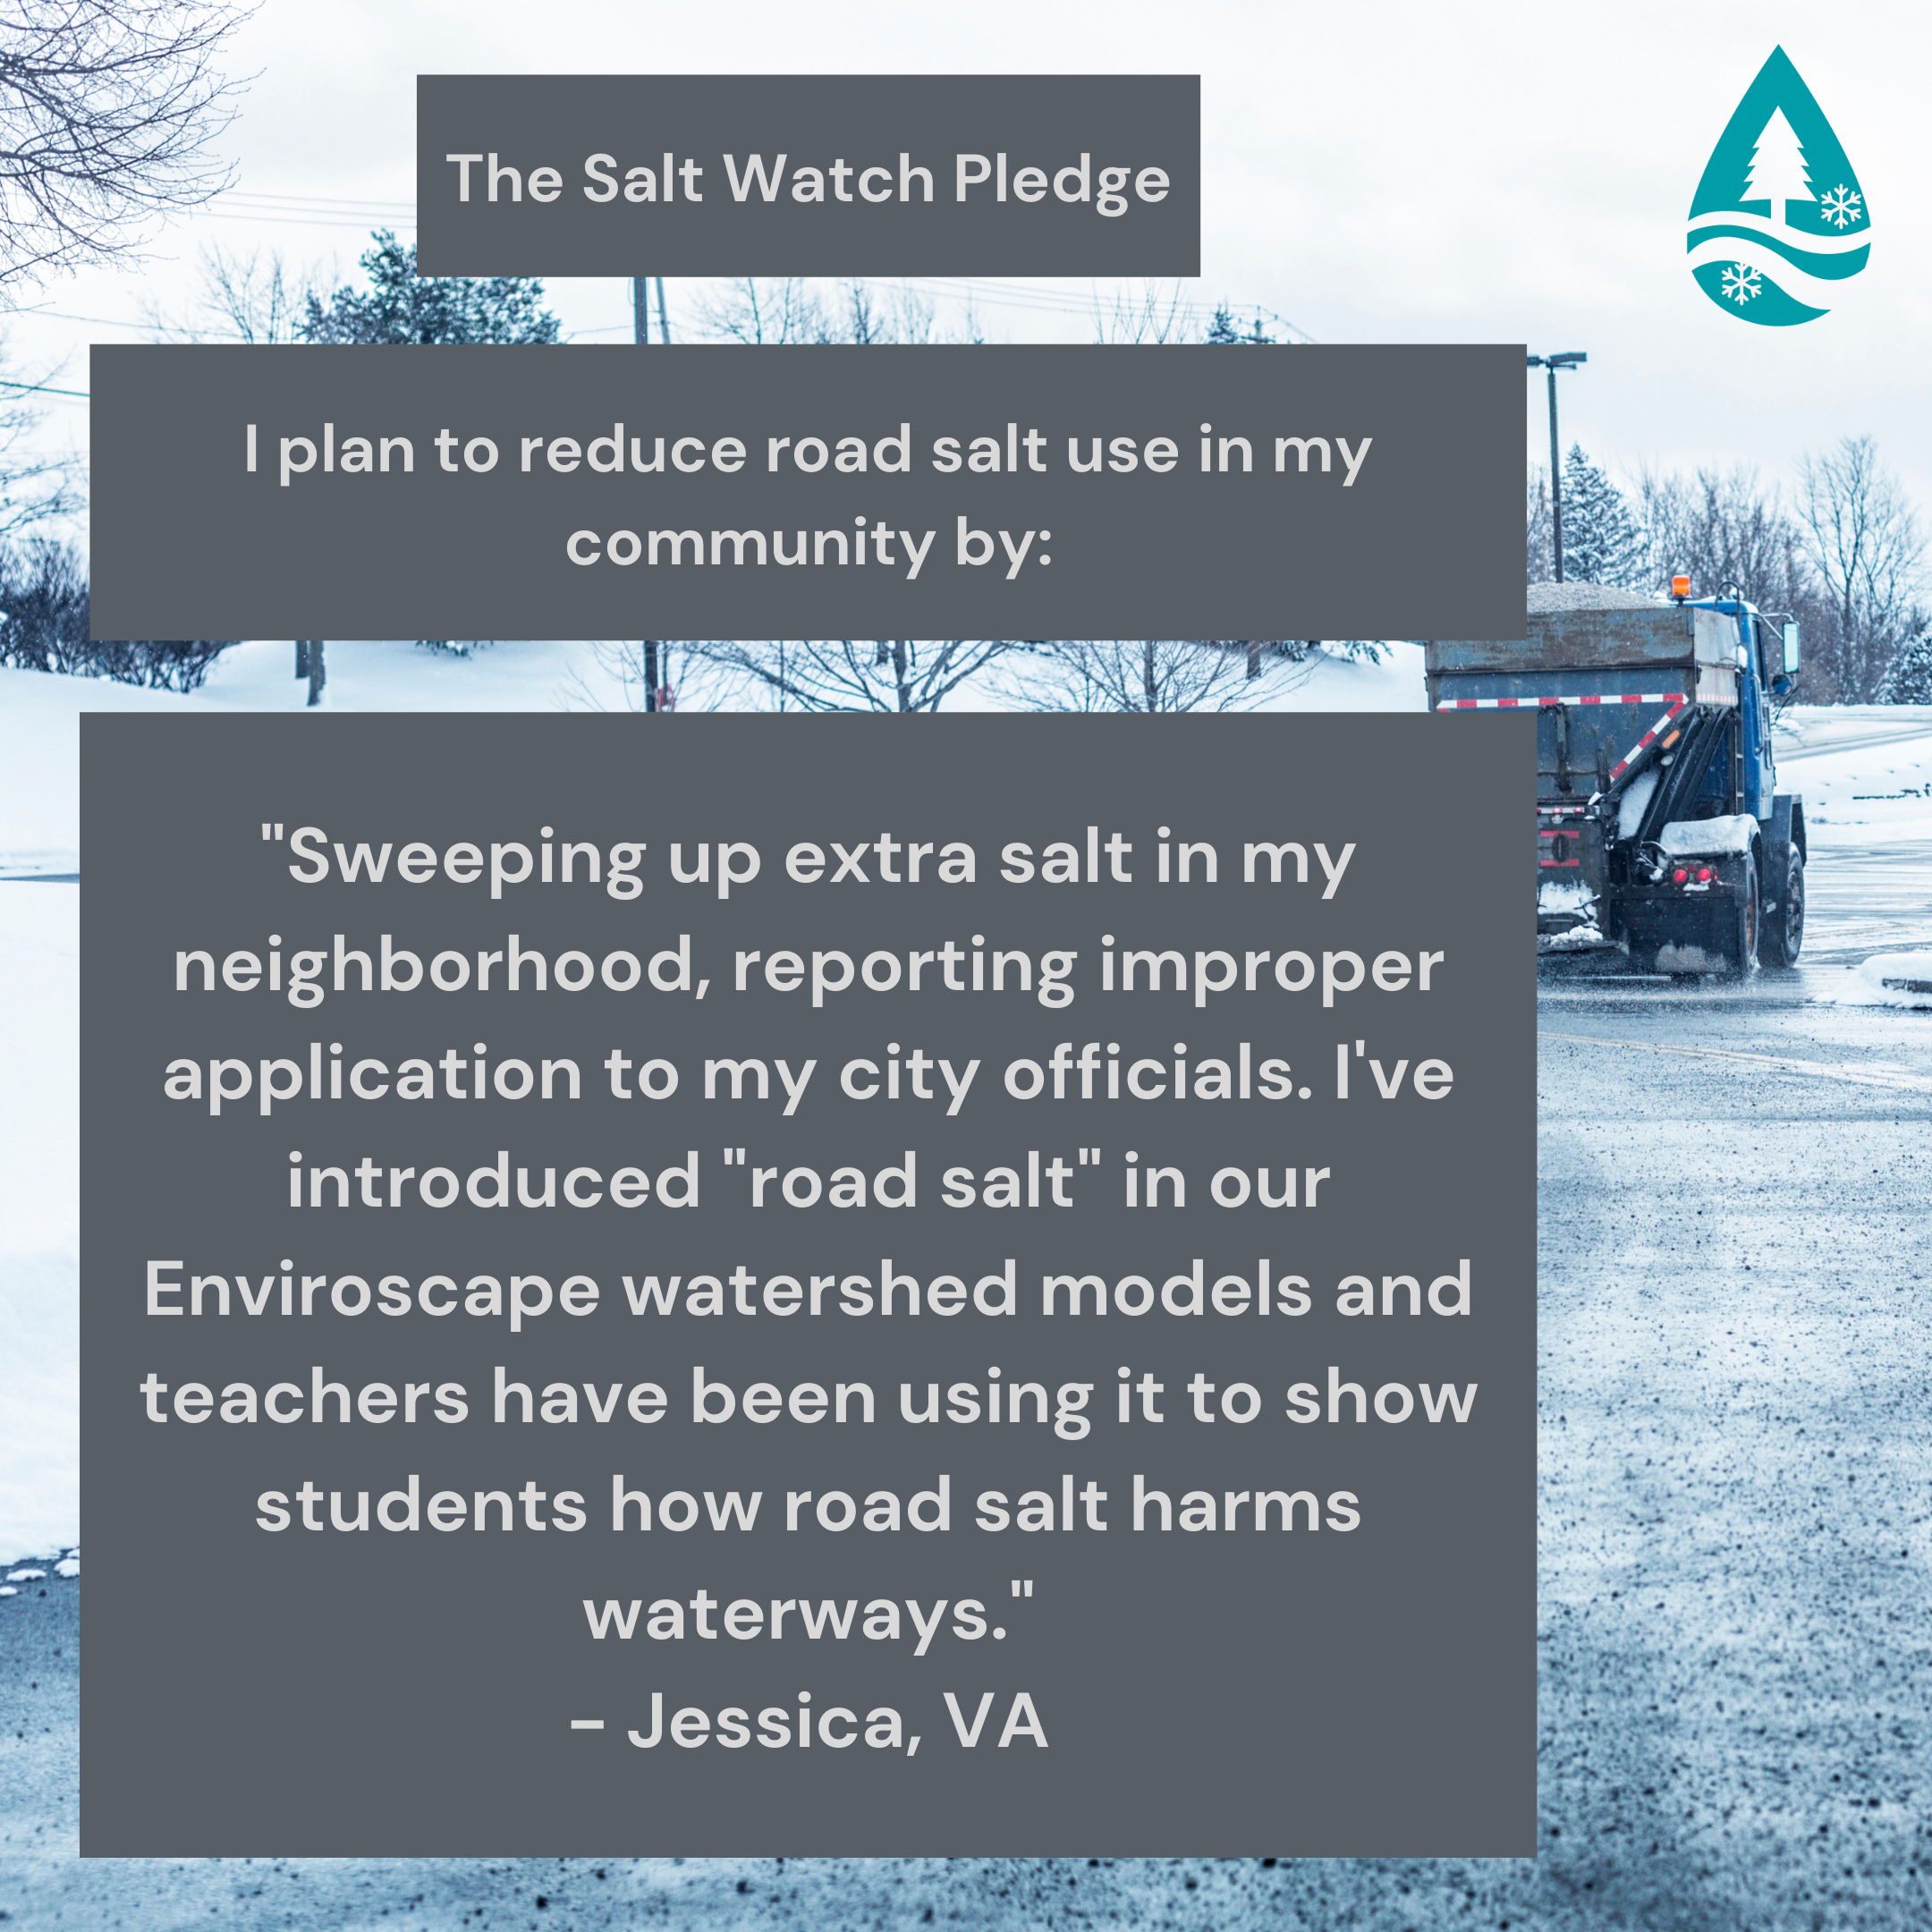 Salt Watch pledge - Jessica